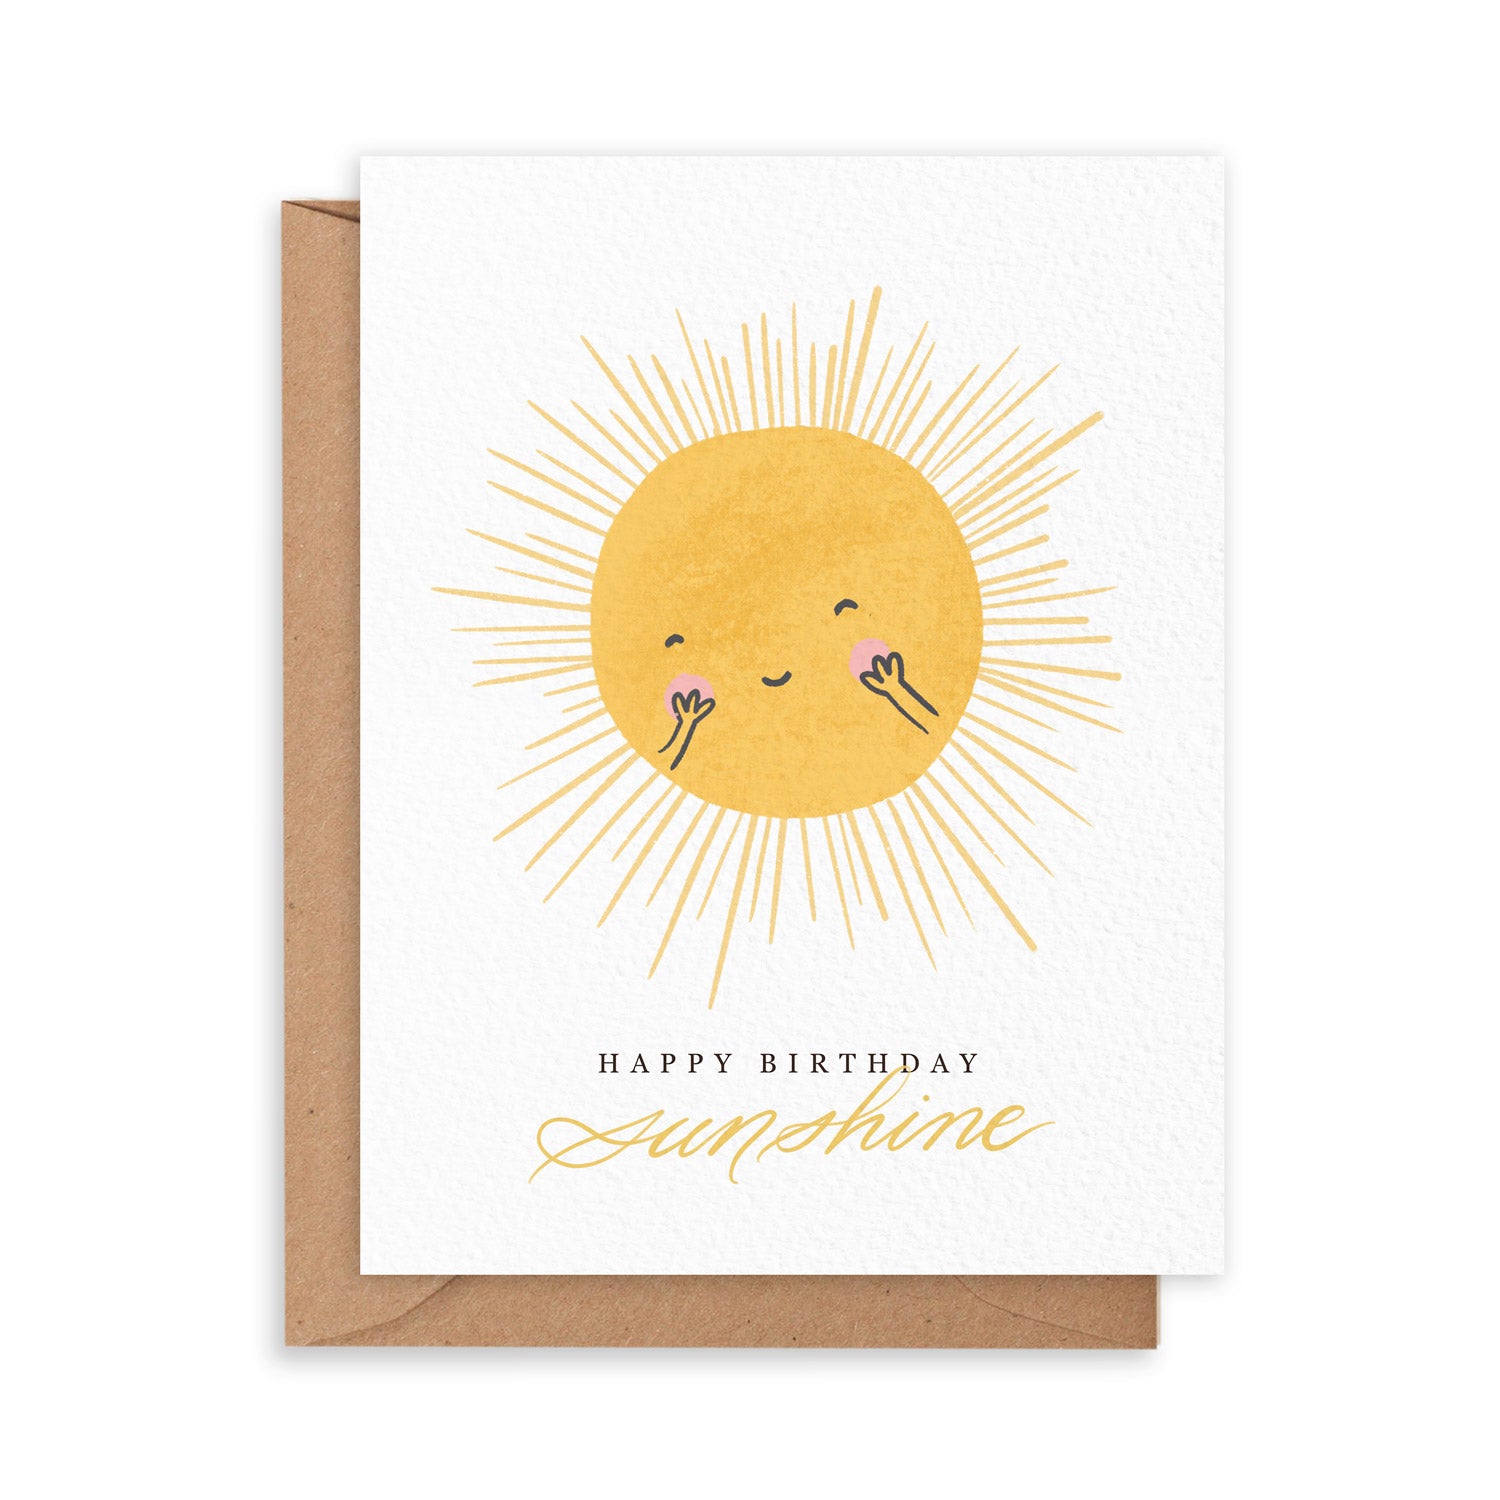 Happy Birthday Sunshine card with a happy sun